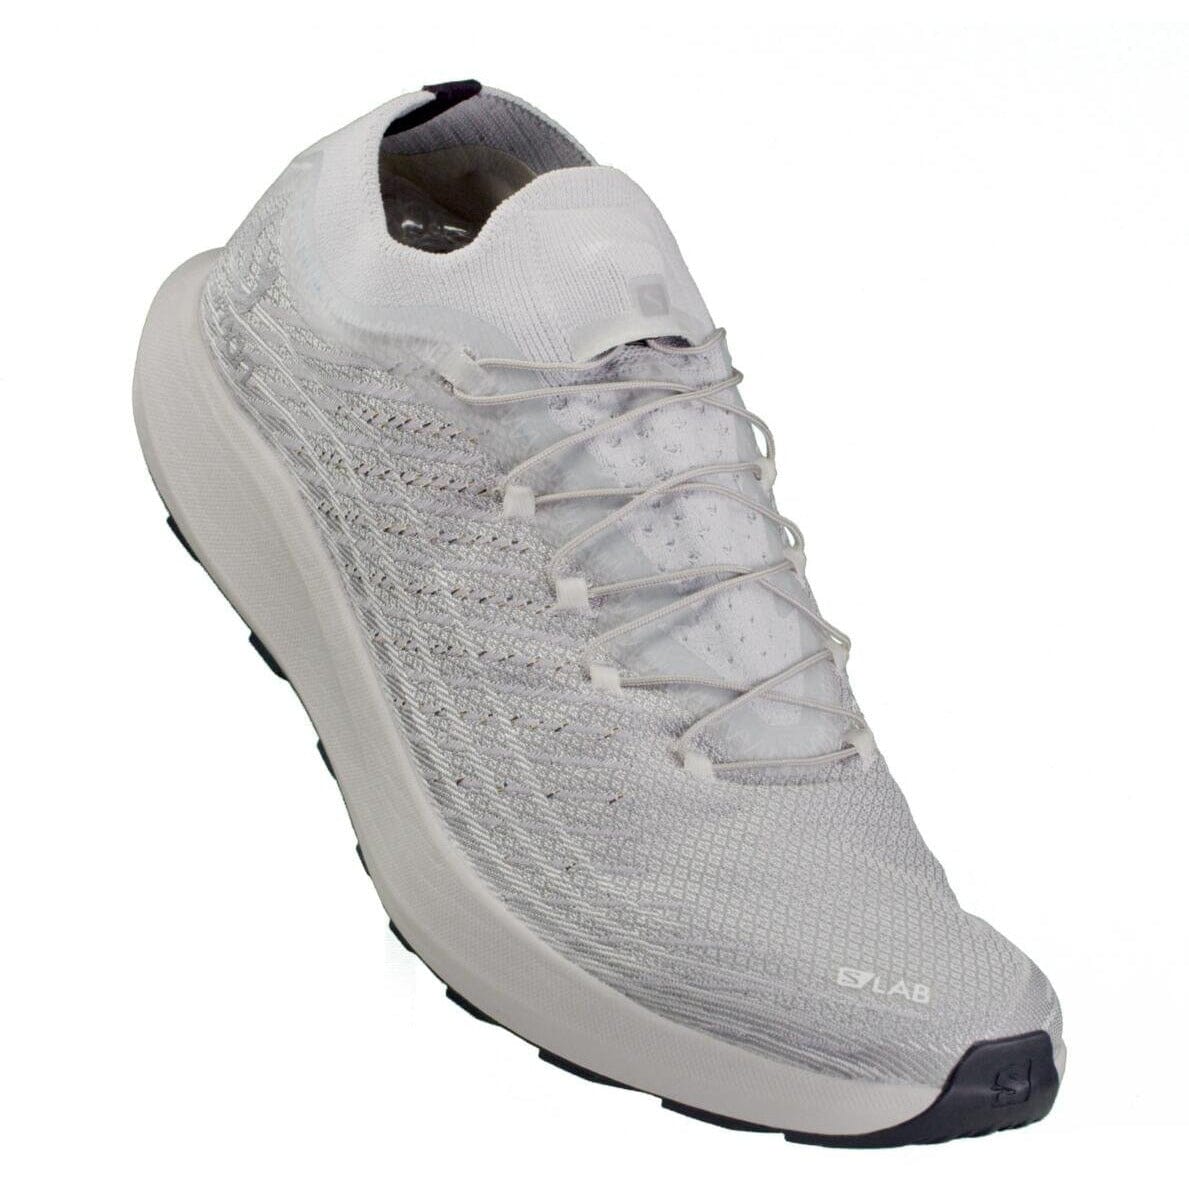 Salomon S/Lab Pulsar Unisex Trail Running Shoes Vapor Blue US 6 (M) US 7 (W) 